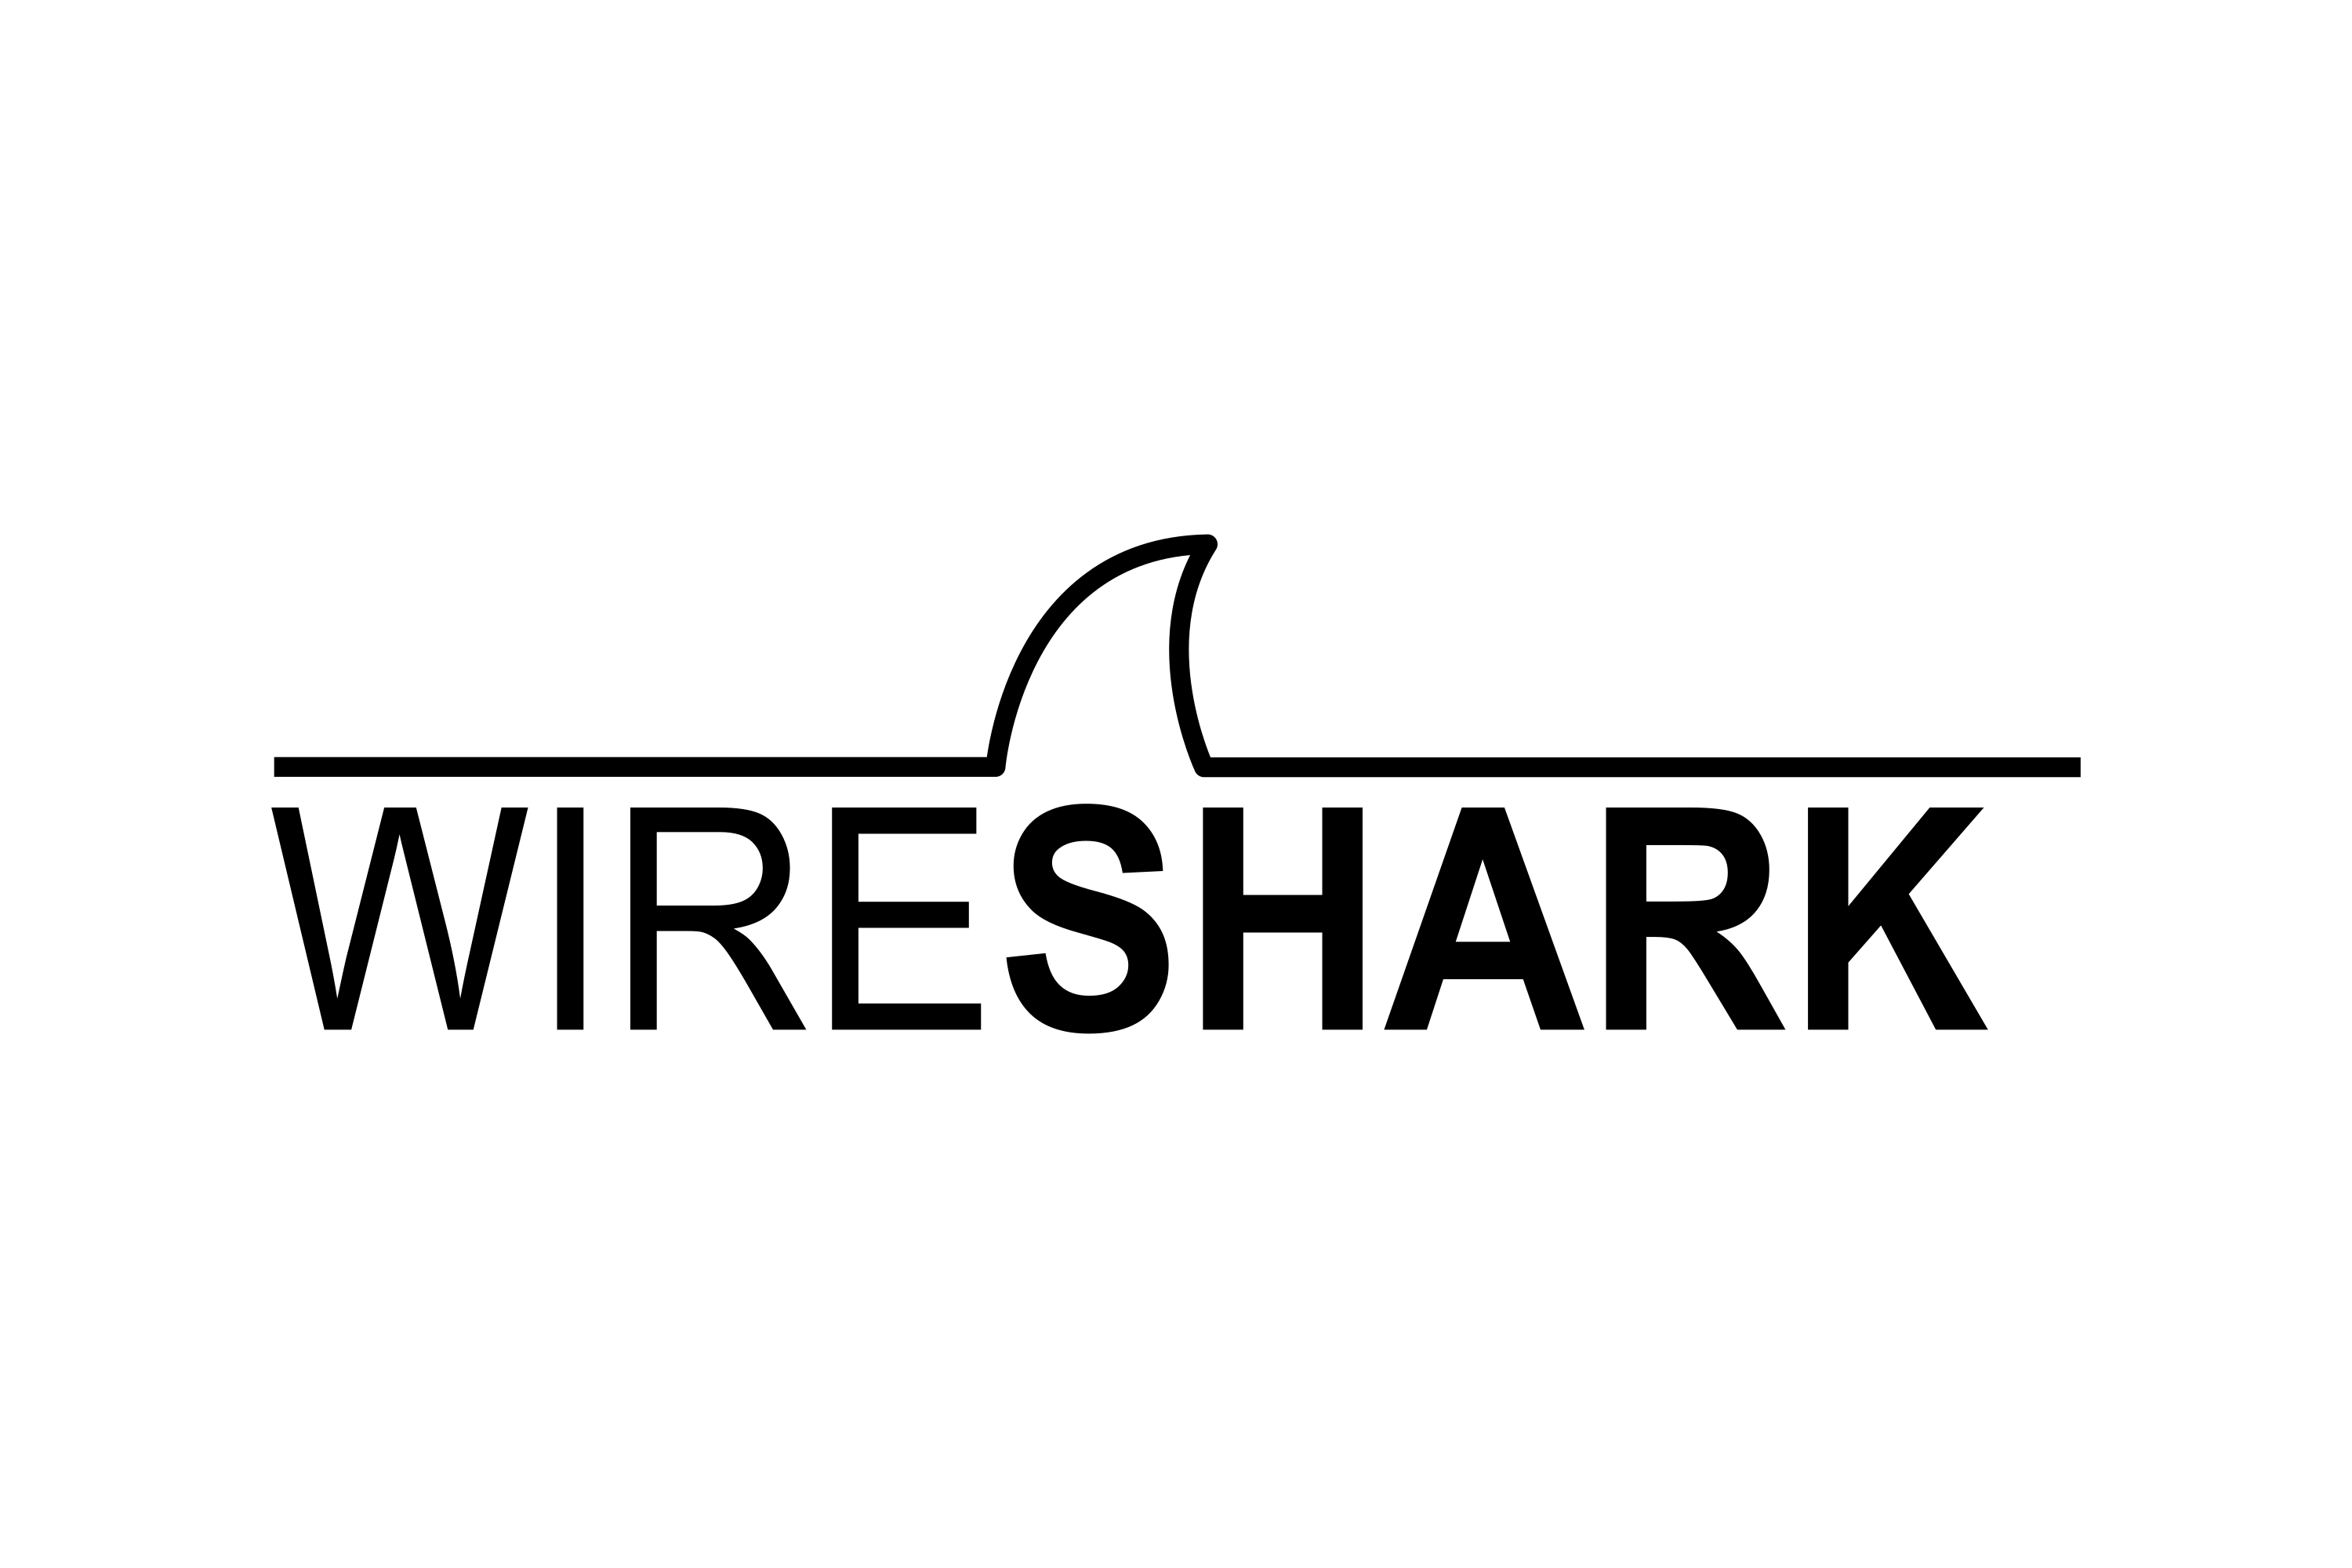 Download Wireshark (Ethereal) Logo in SVG Vector or PNG File Format